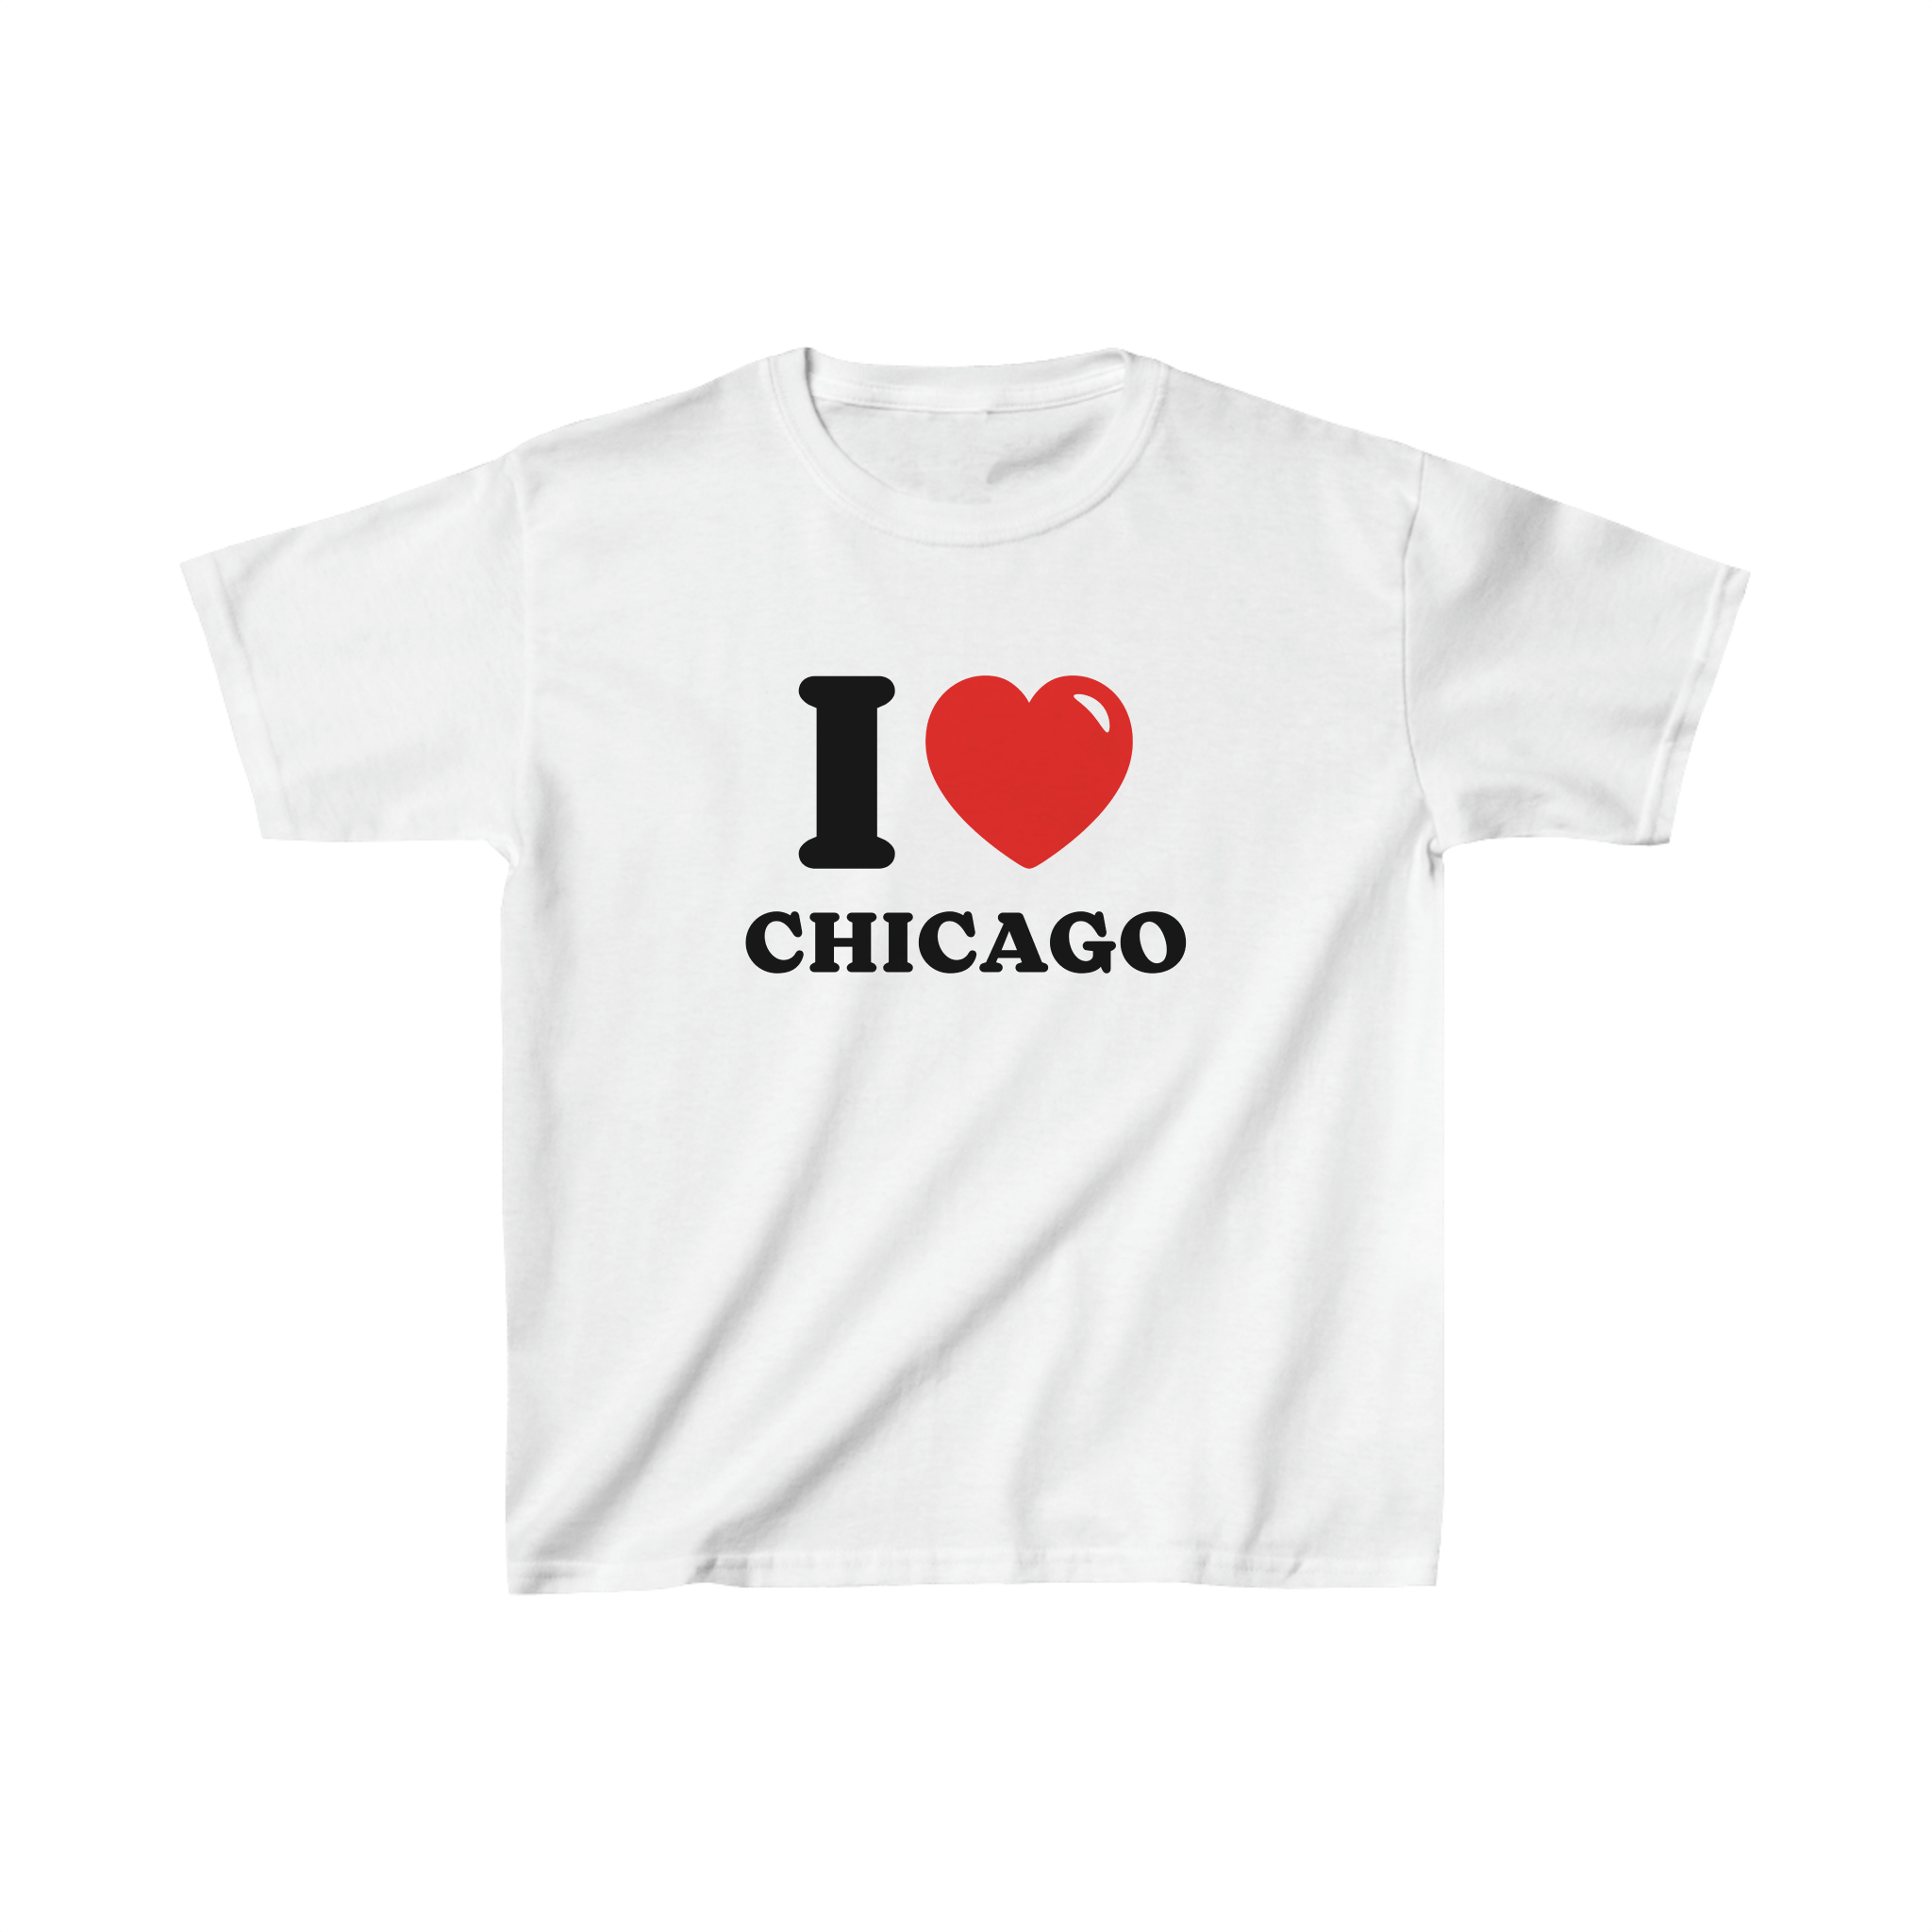 'I love Chicago' baby tee - In Print We Trust